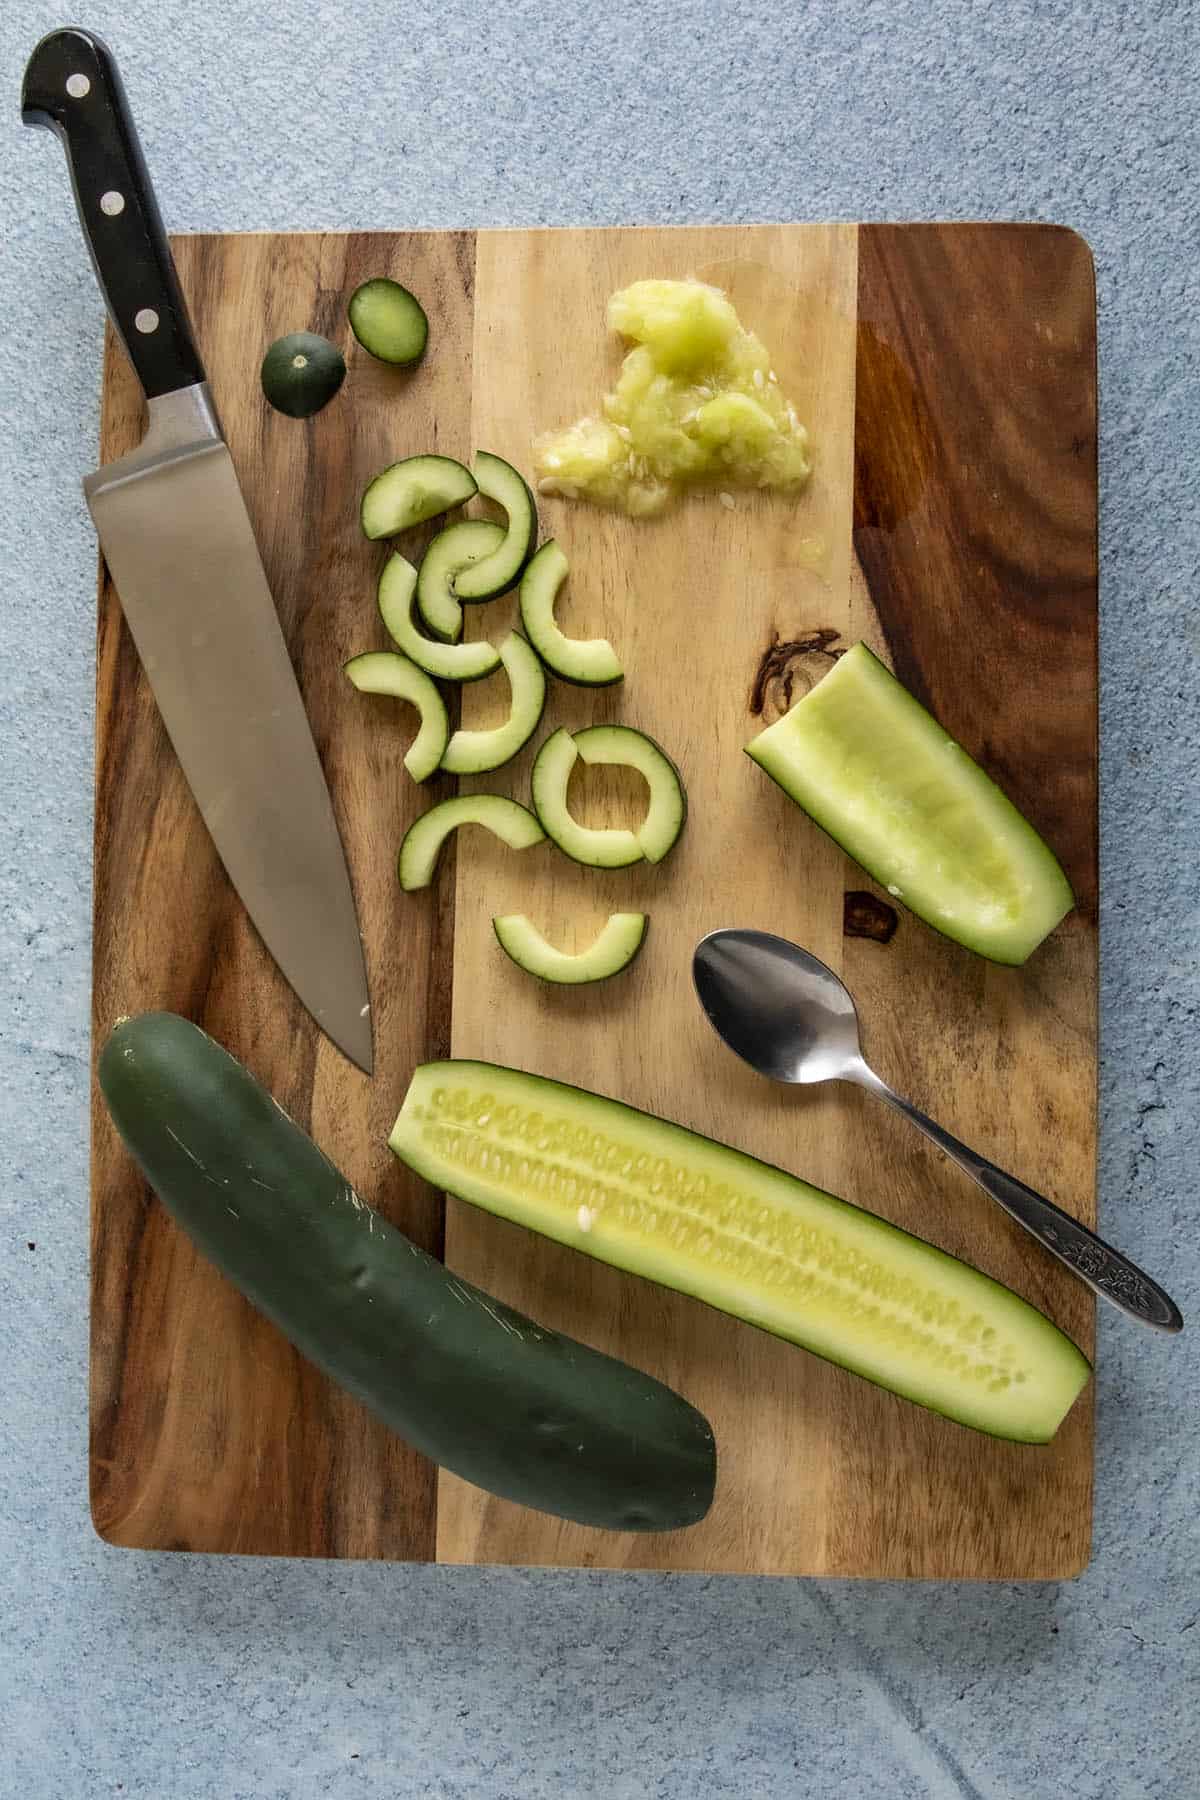 Slicing cucumbers to make Sichuan spiced cucumber salad